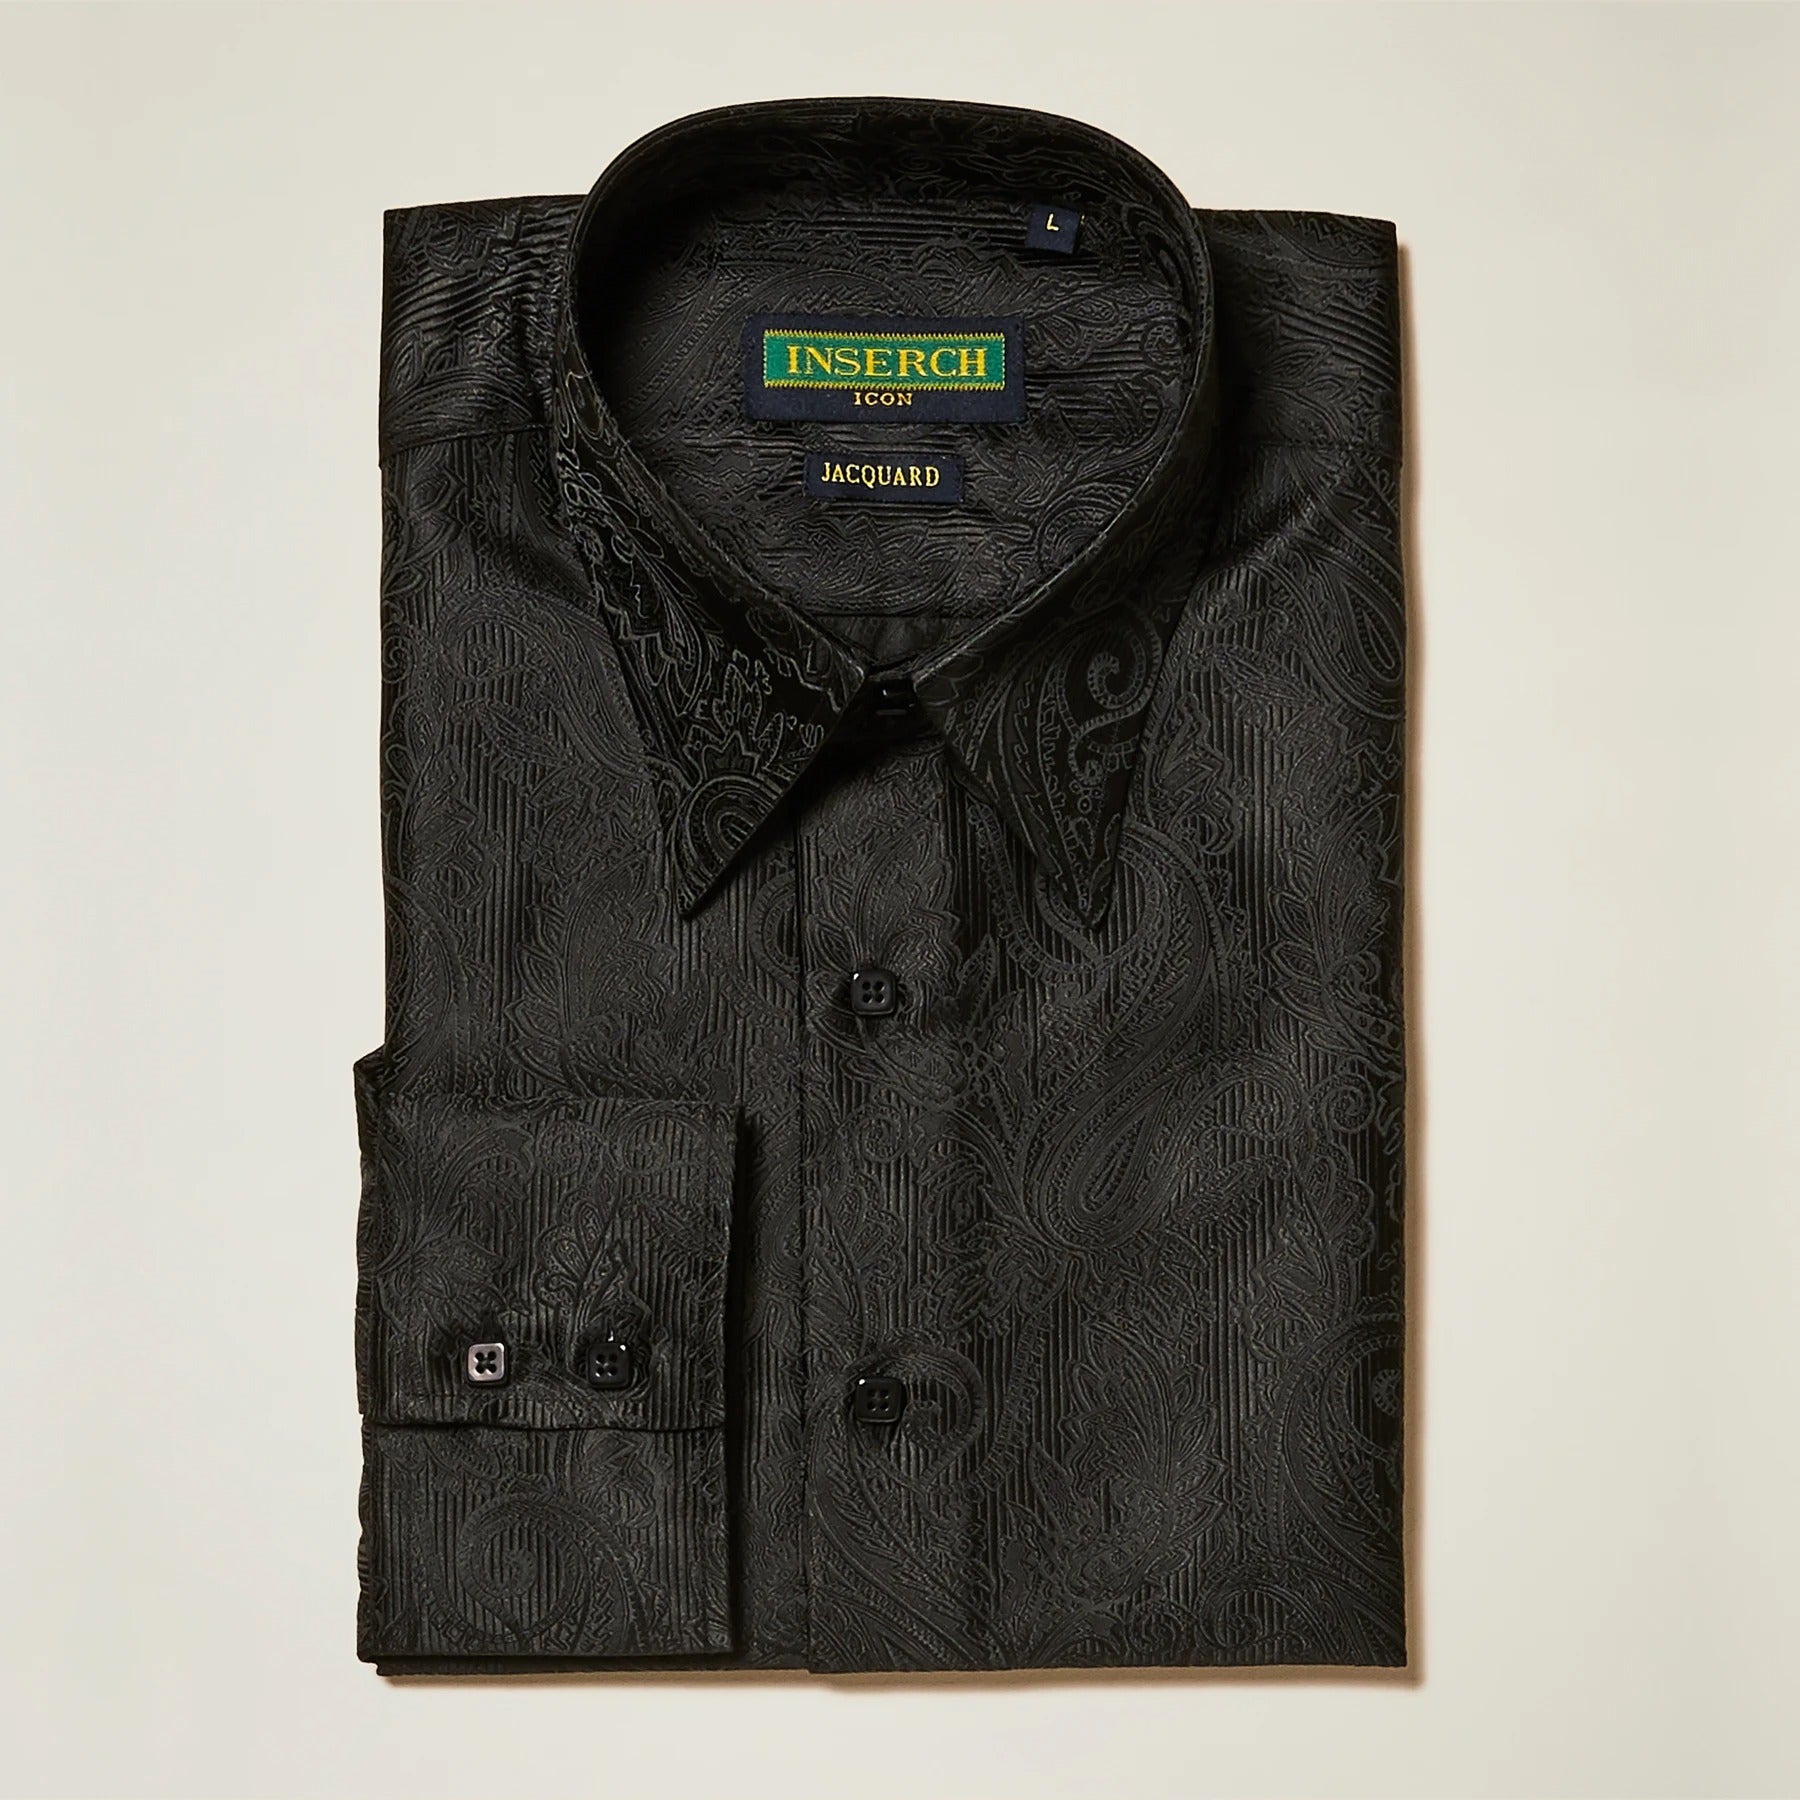 Inserch Long Sleeve Paisley Jacquard Shirt LS005-01 Black